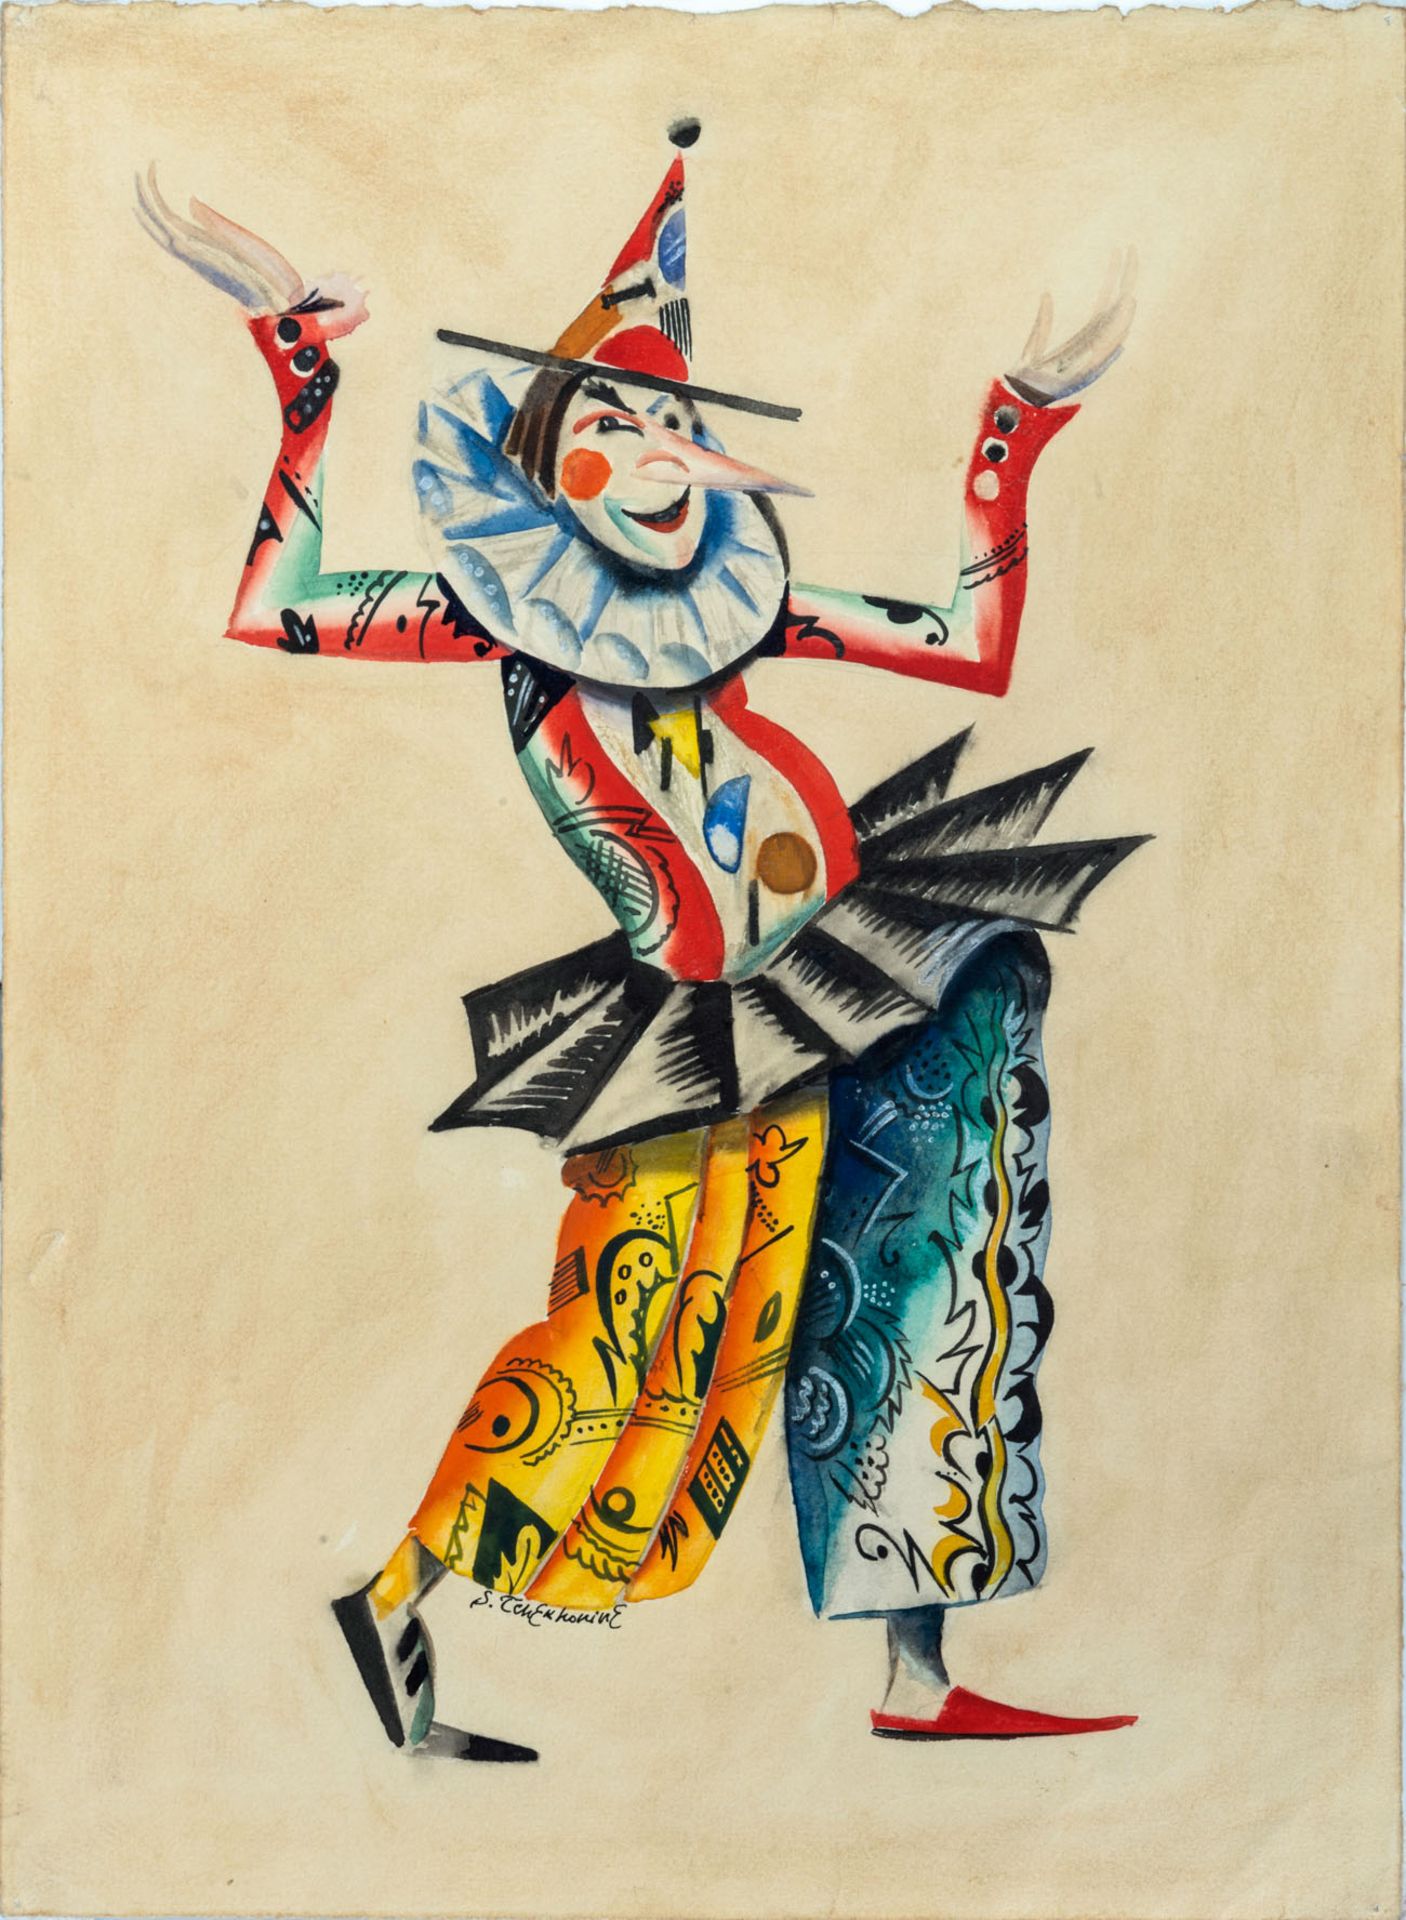 Sergey Chekhonin (1878-1936), Costume Design - "Clown"